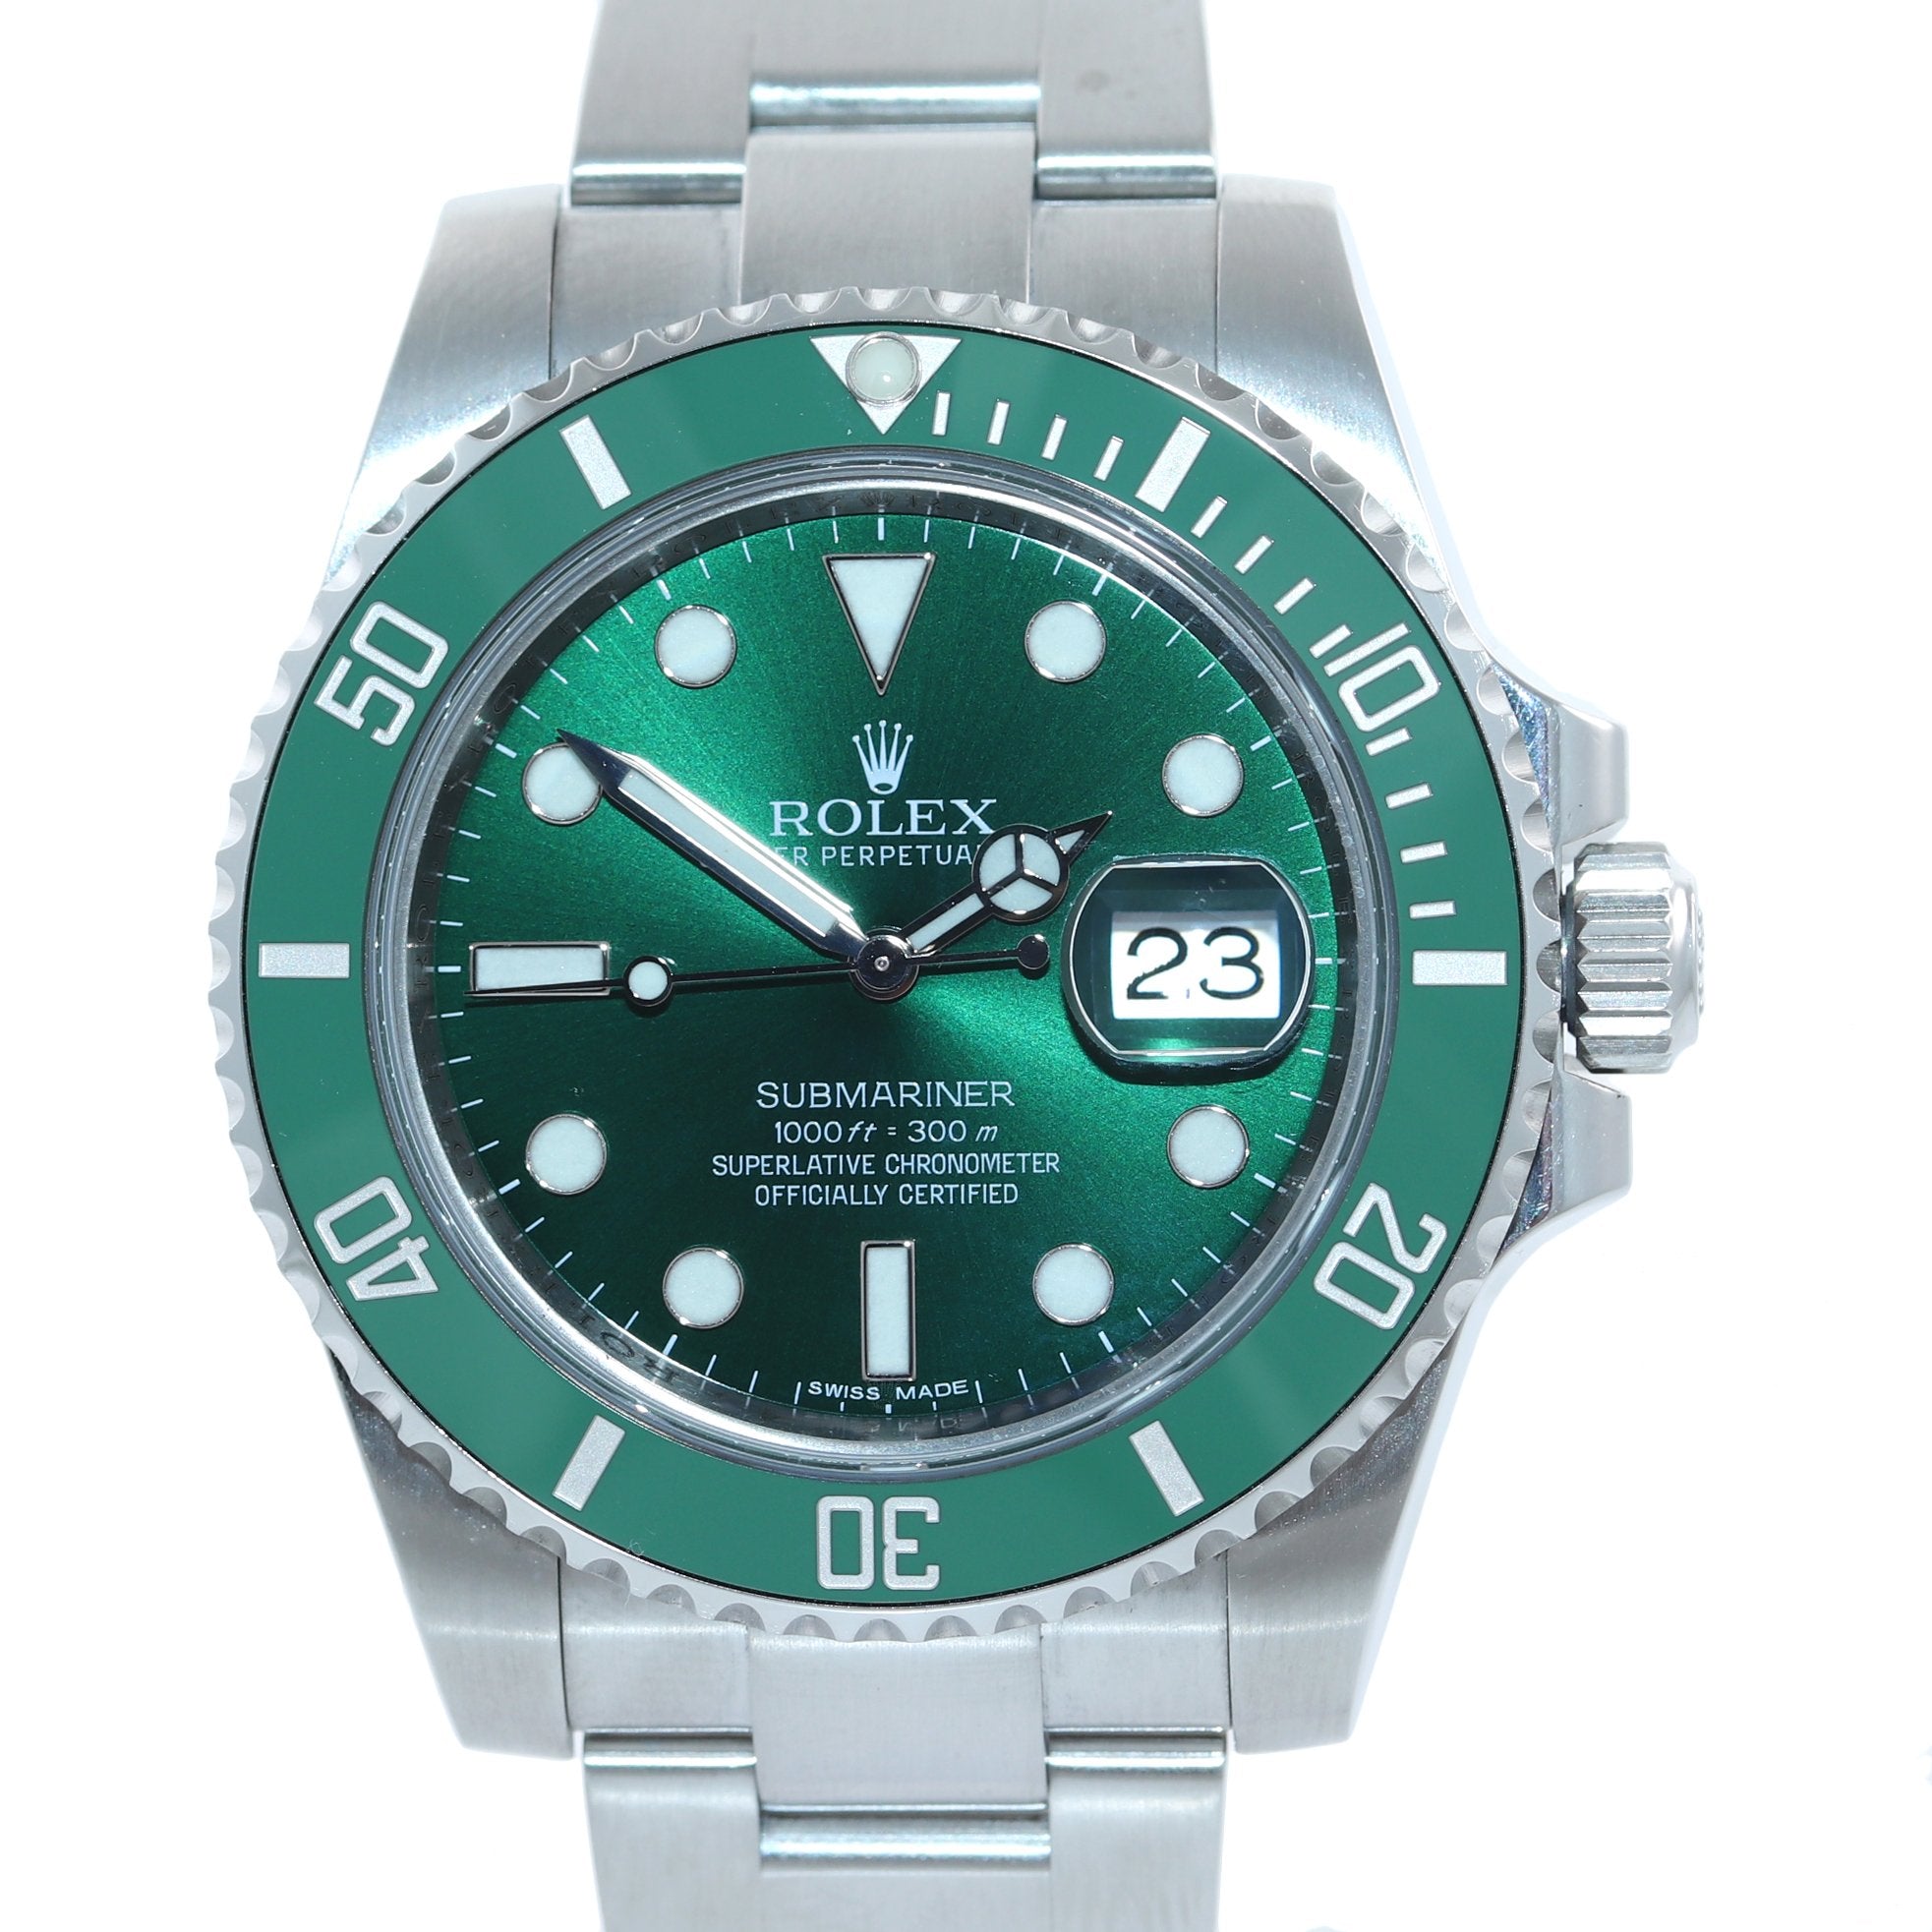 2019 DISCONTINUED Rolex Submariner Hulk 116610LV Green Ceramic Watch Box